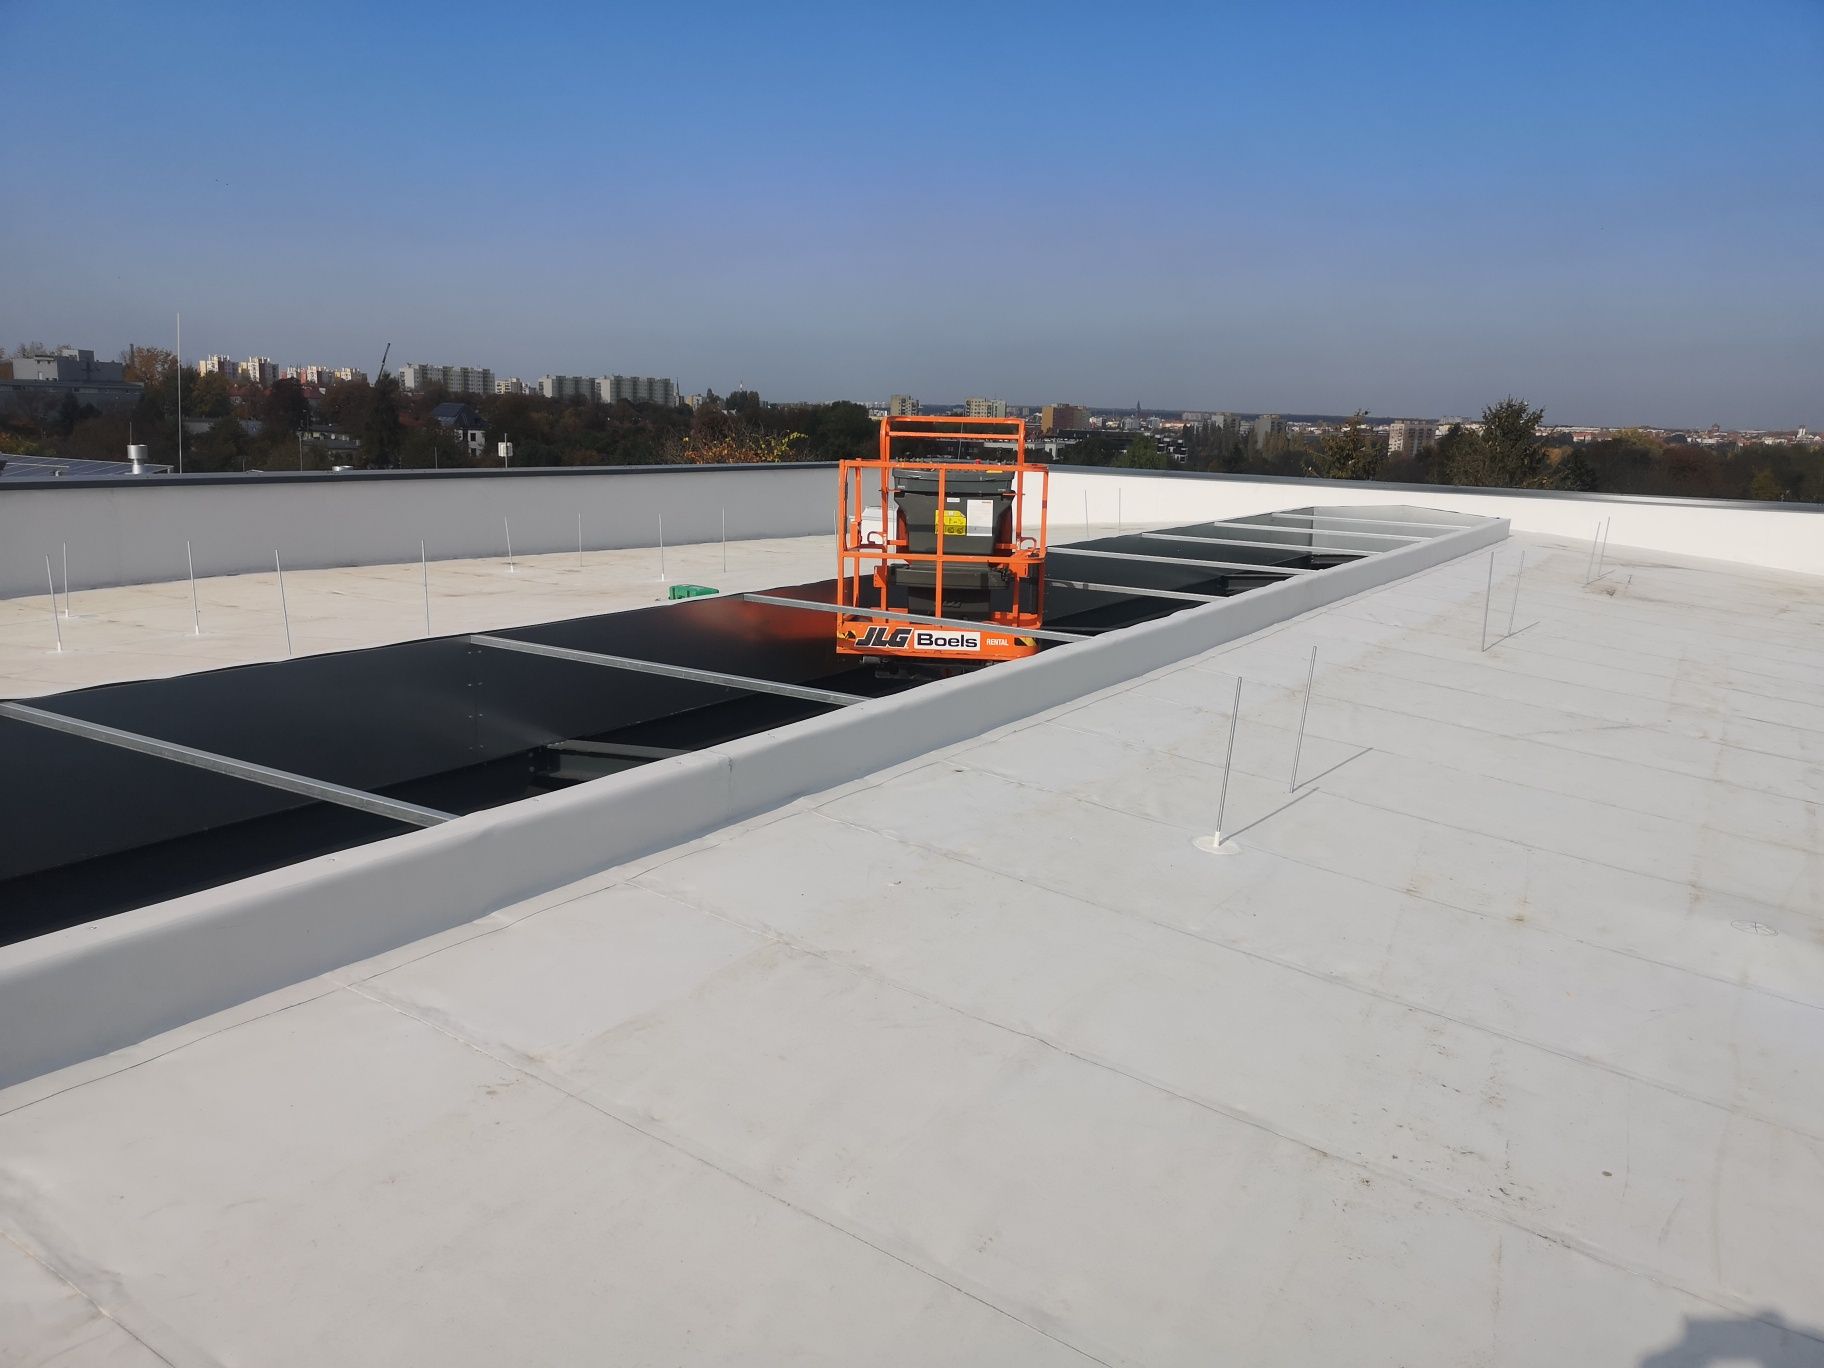 Firma Dach - Partner dachy płaskie